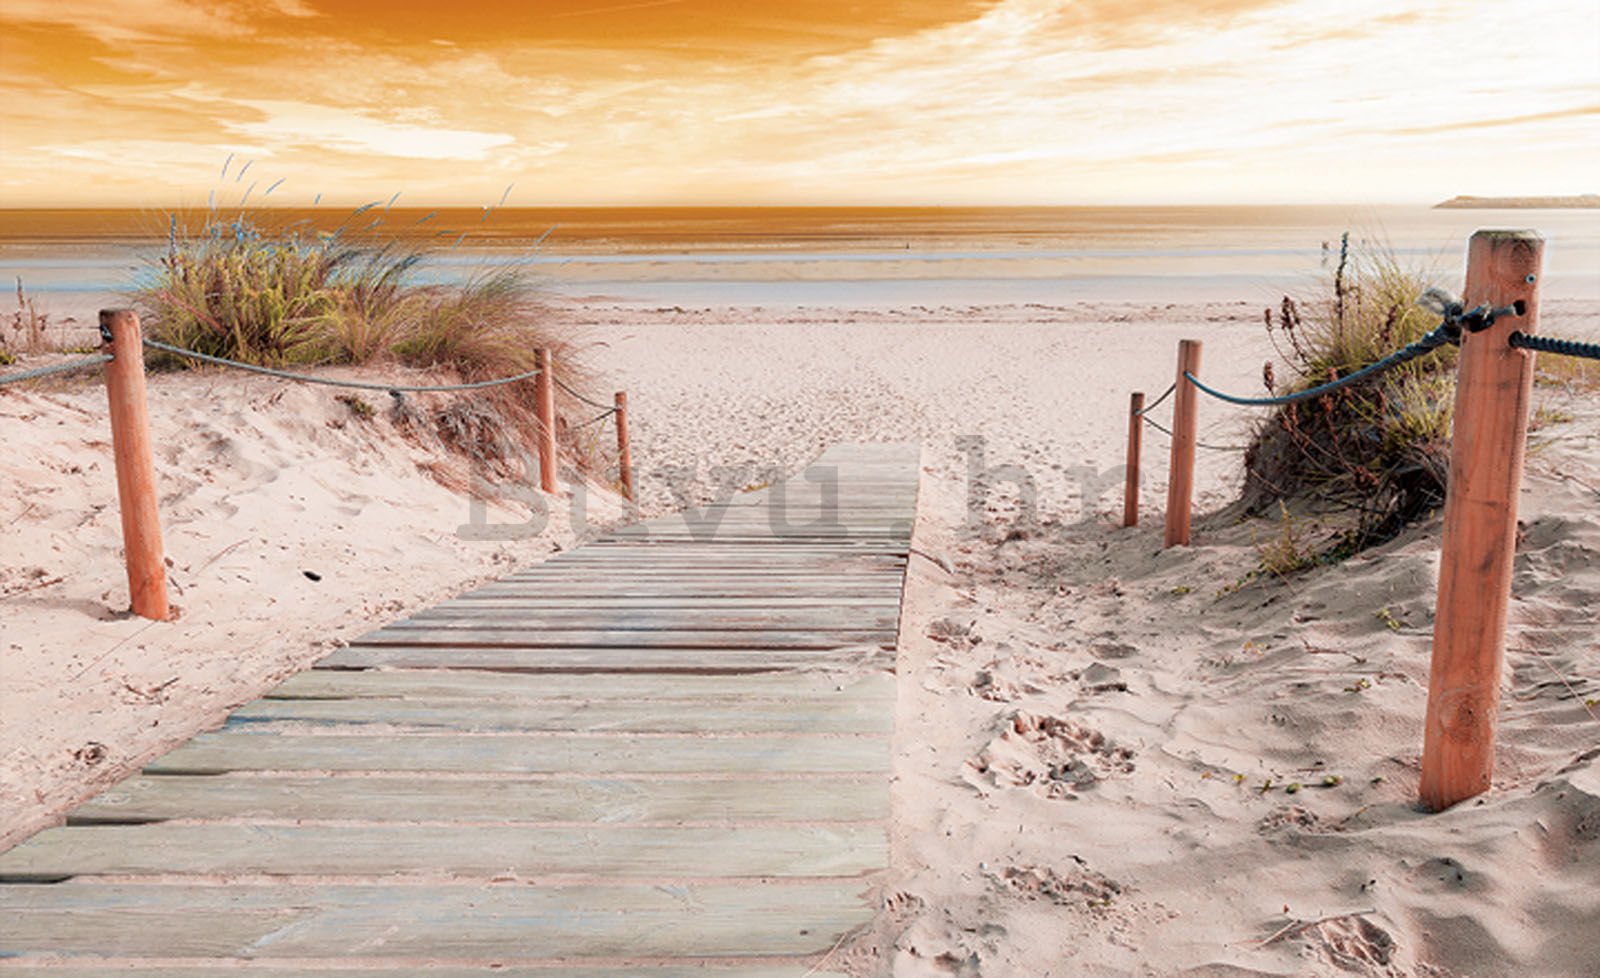 Vlies foto tapeta: Plaža (4) - 208x146 cm